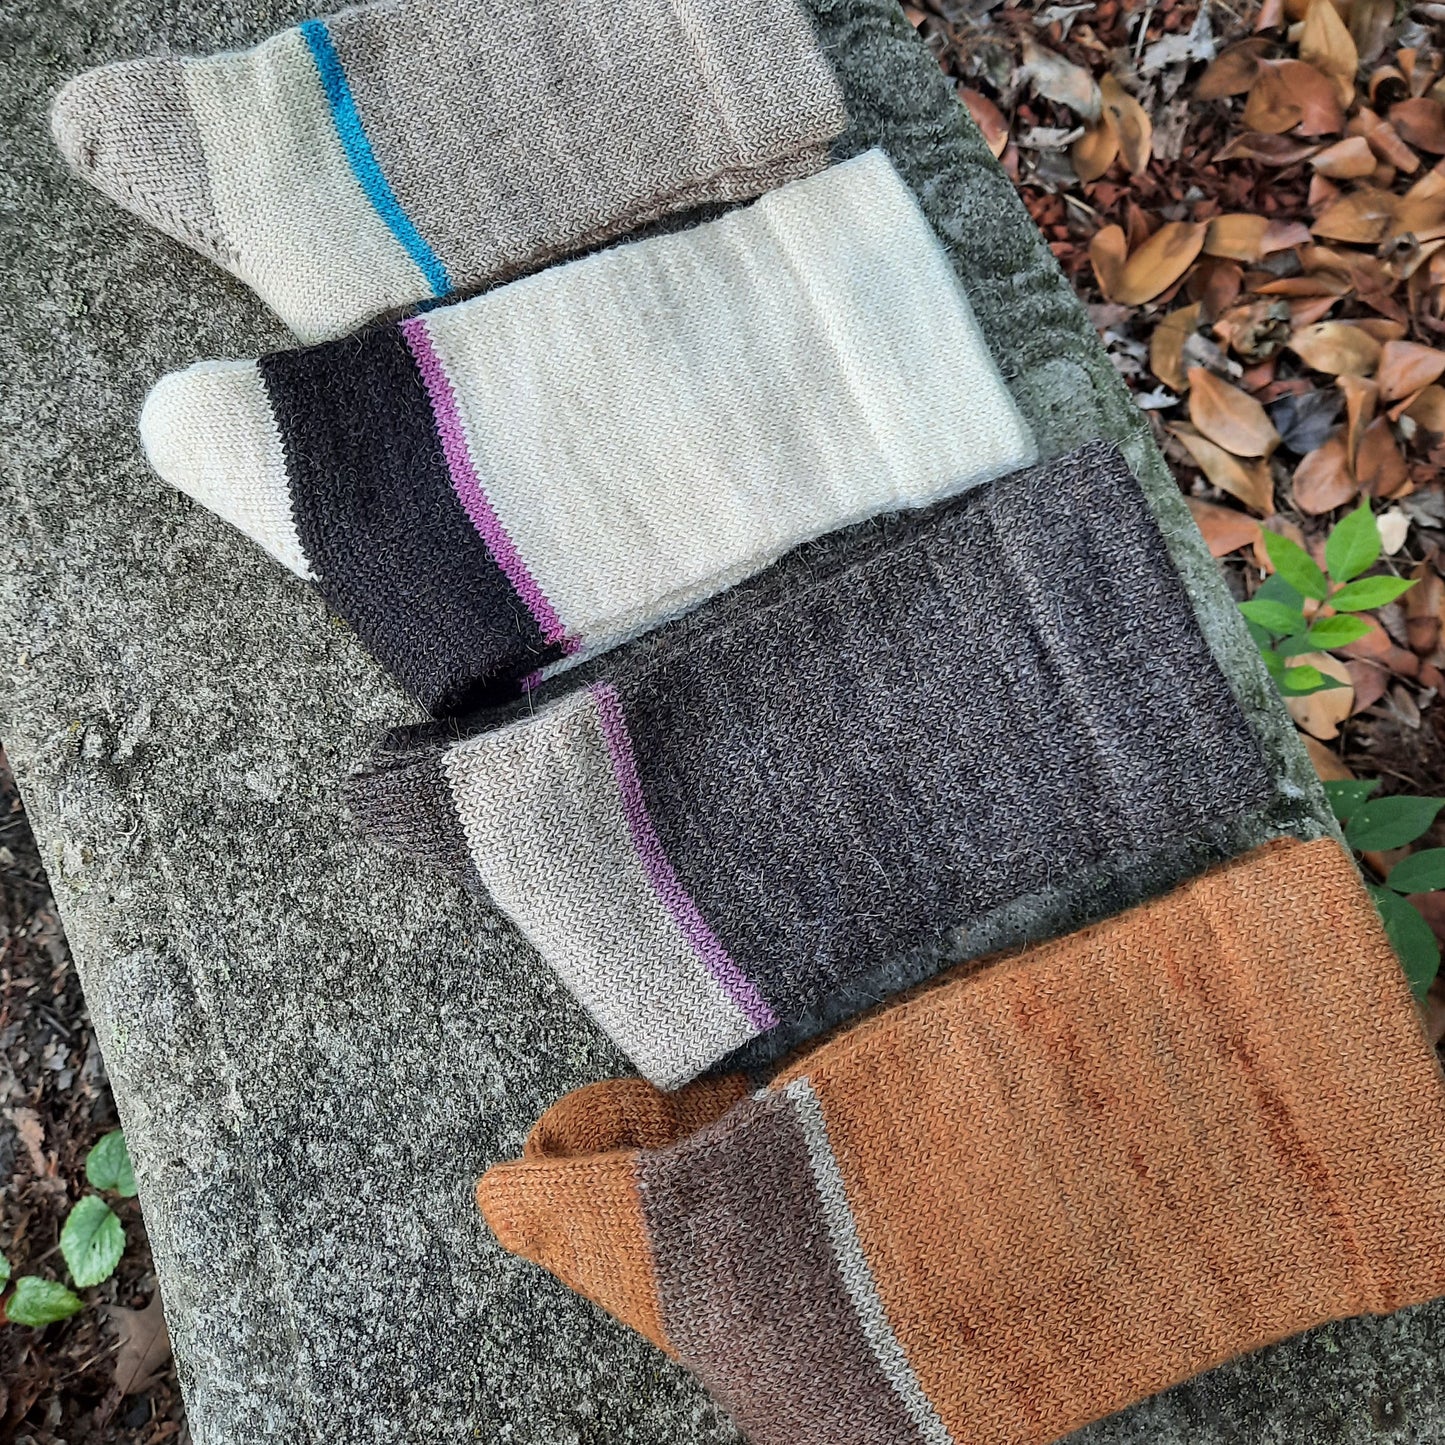 United States, Kathleen Oliver / Sweet Tree Hill Farm, Shepherd’s Art Socks: The Color Block Duo